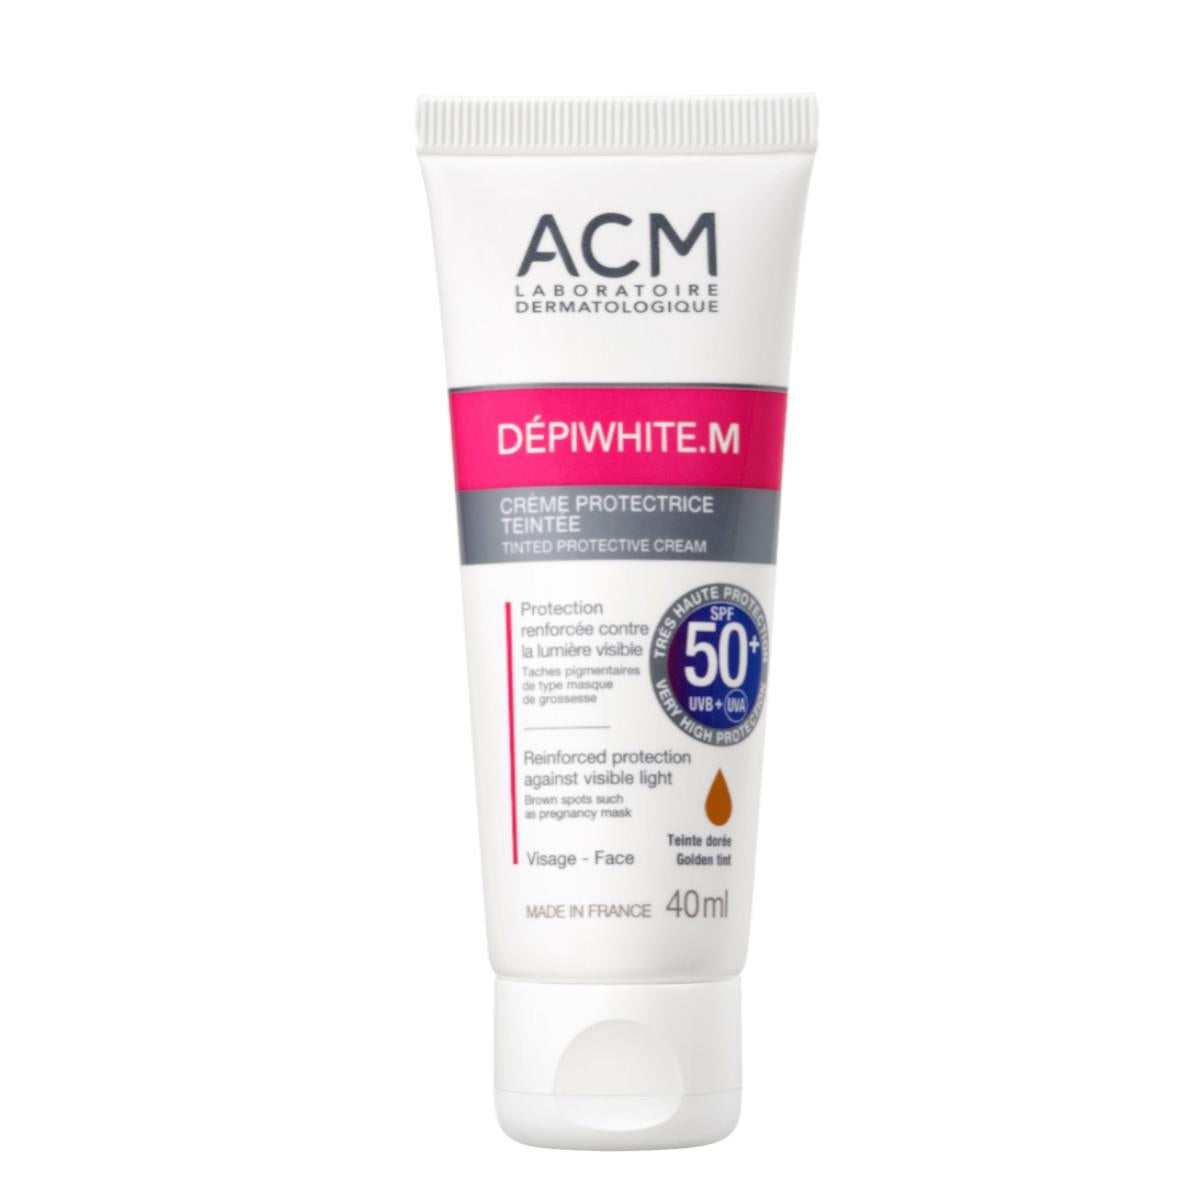 ACM DEPIWHITE M CREMA PROTECTORA CON COLOR FPS50+ 40ML | The Glow Shop